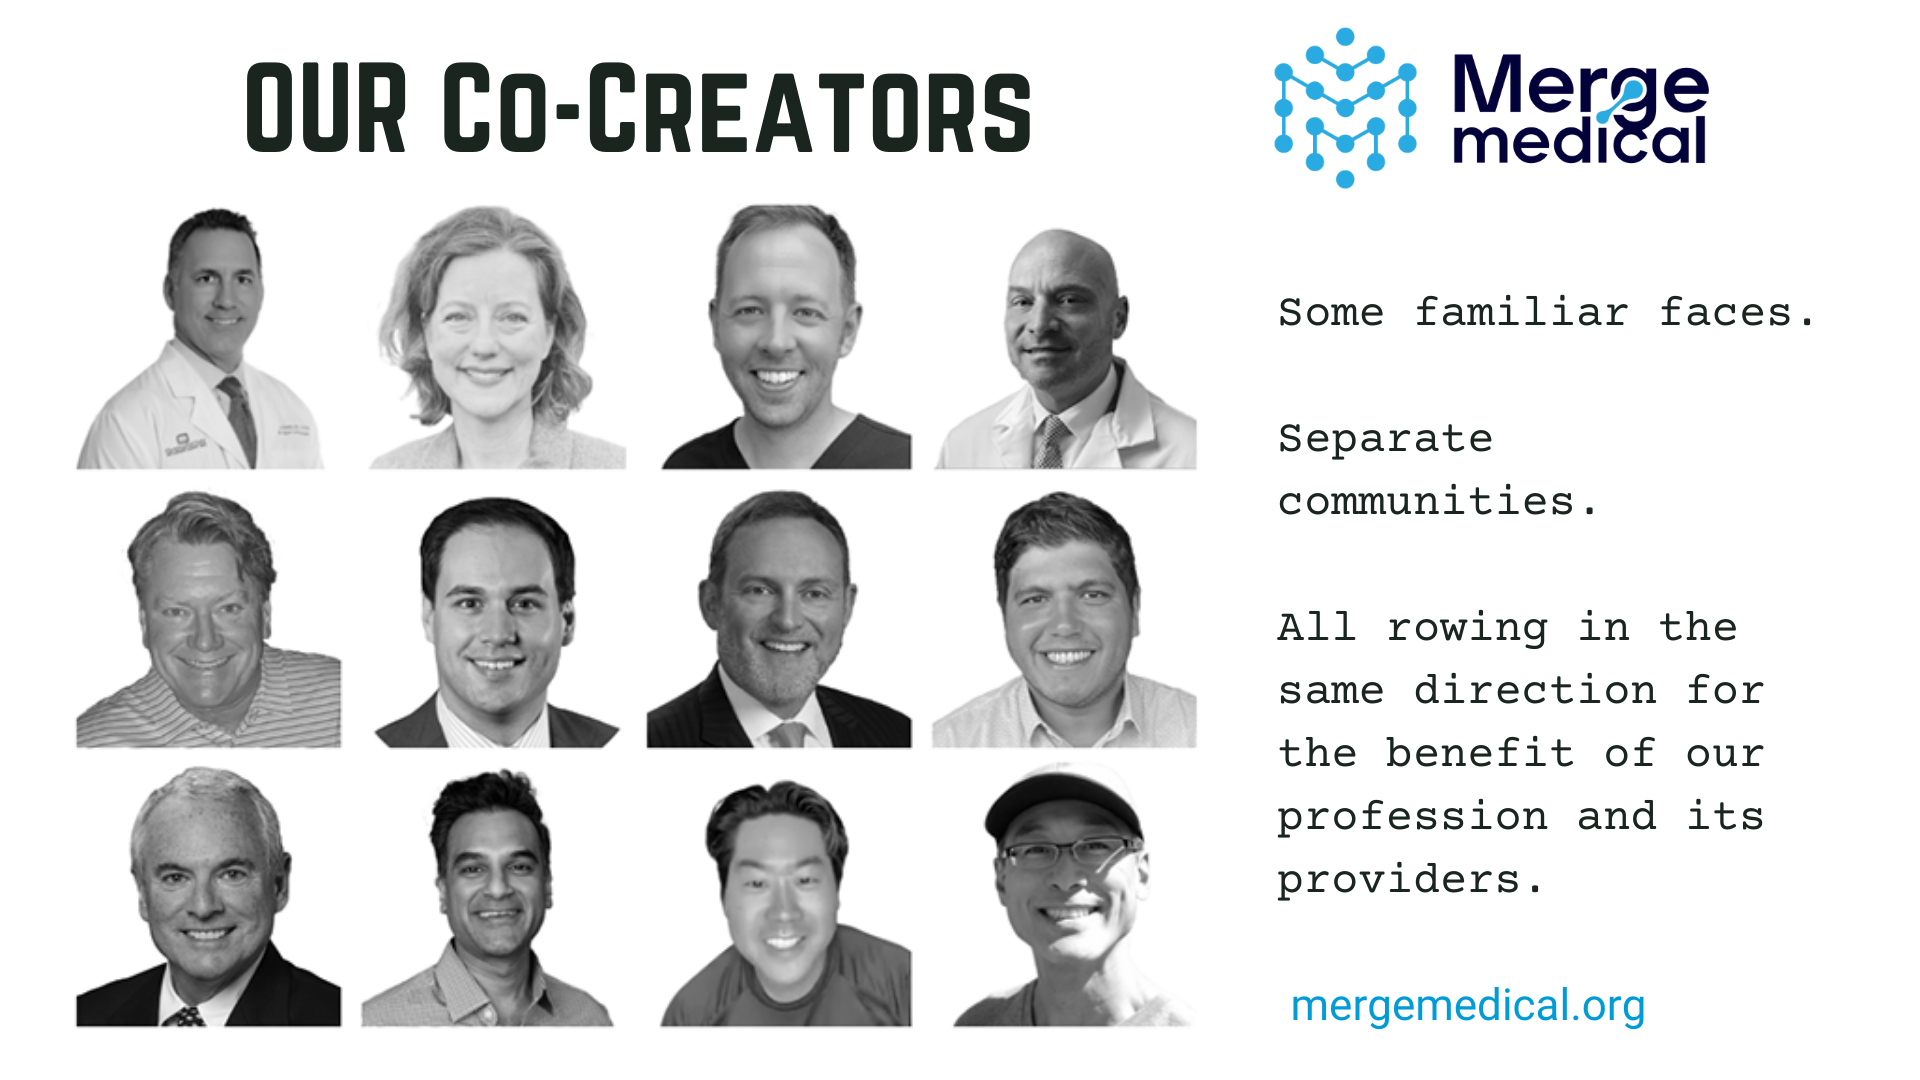 Meet the Merge Medical Co-Creators